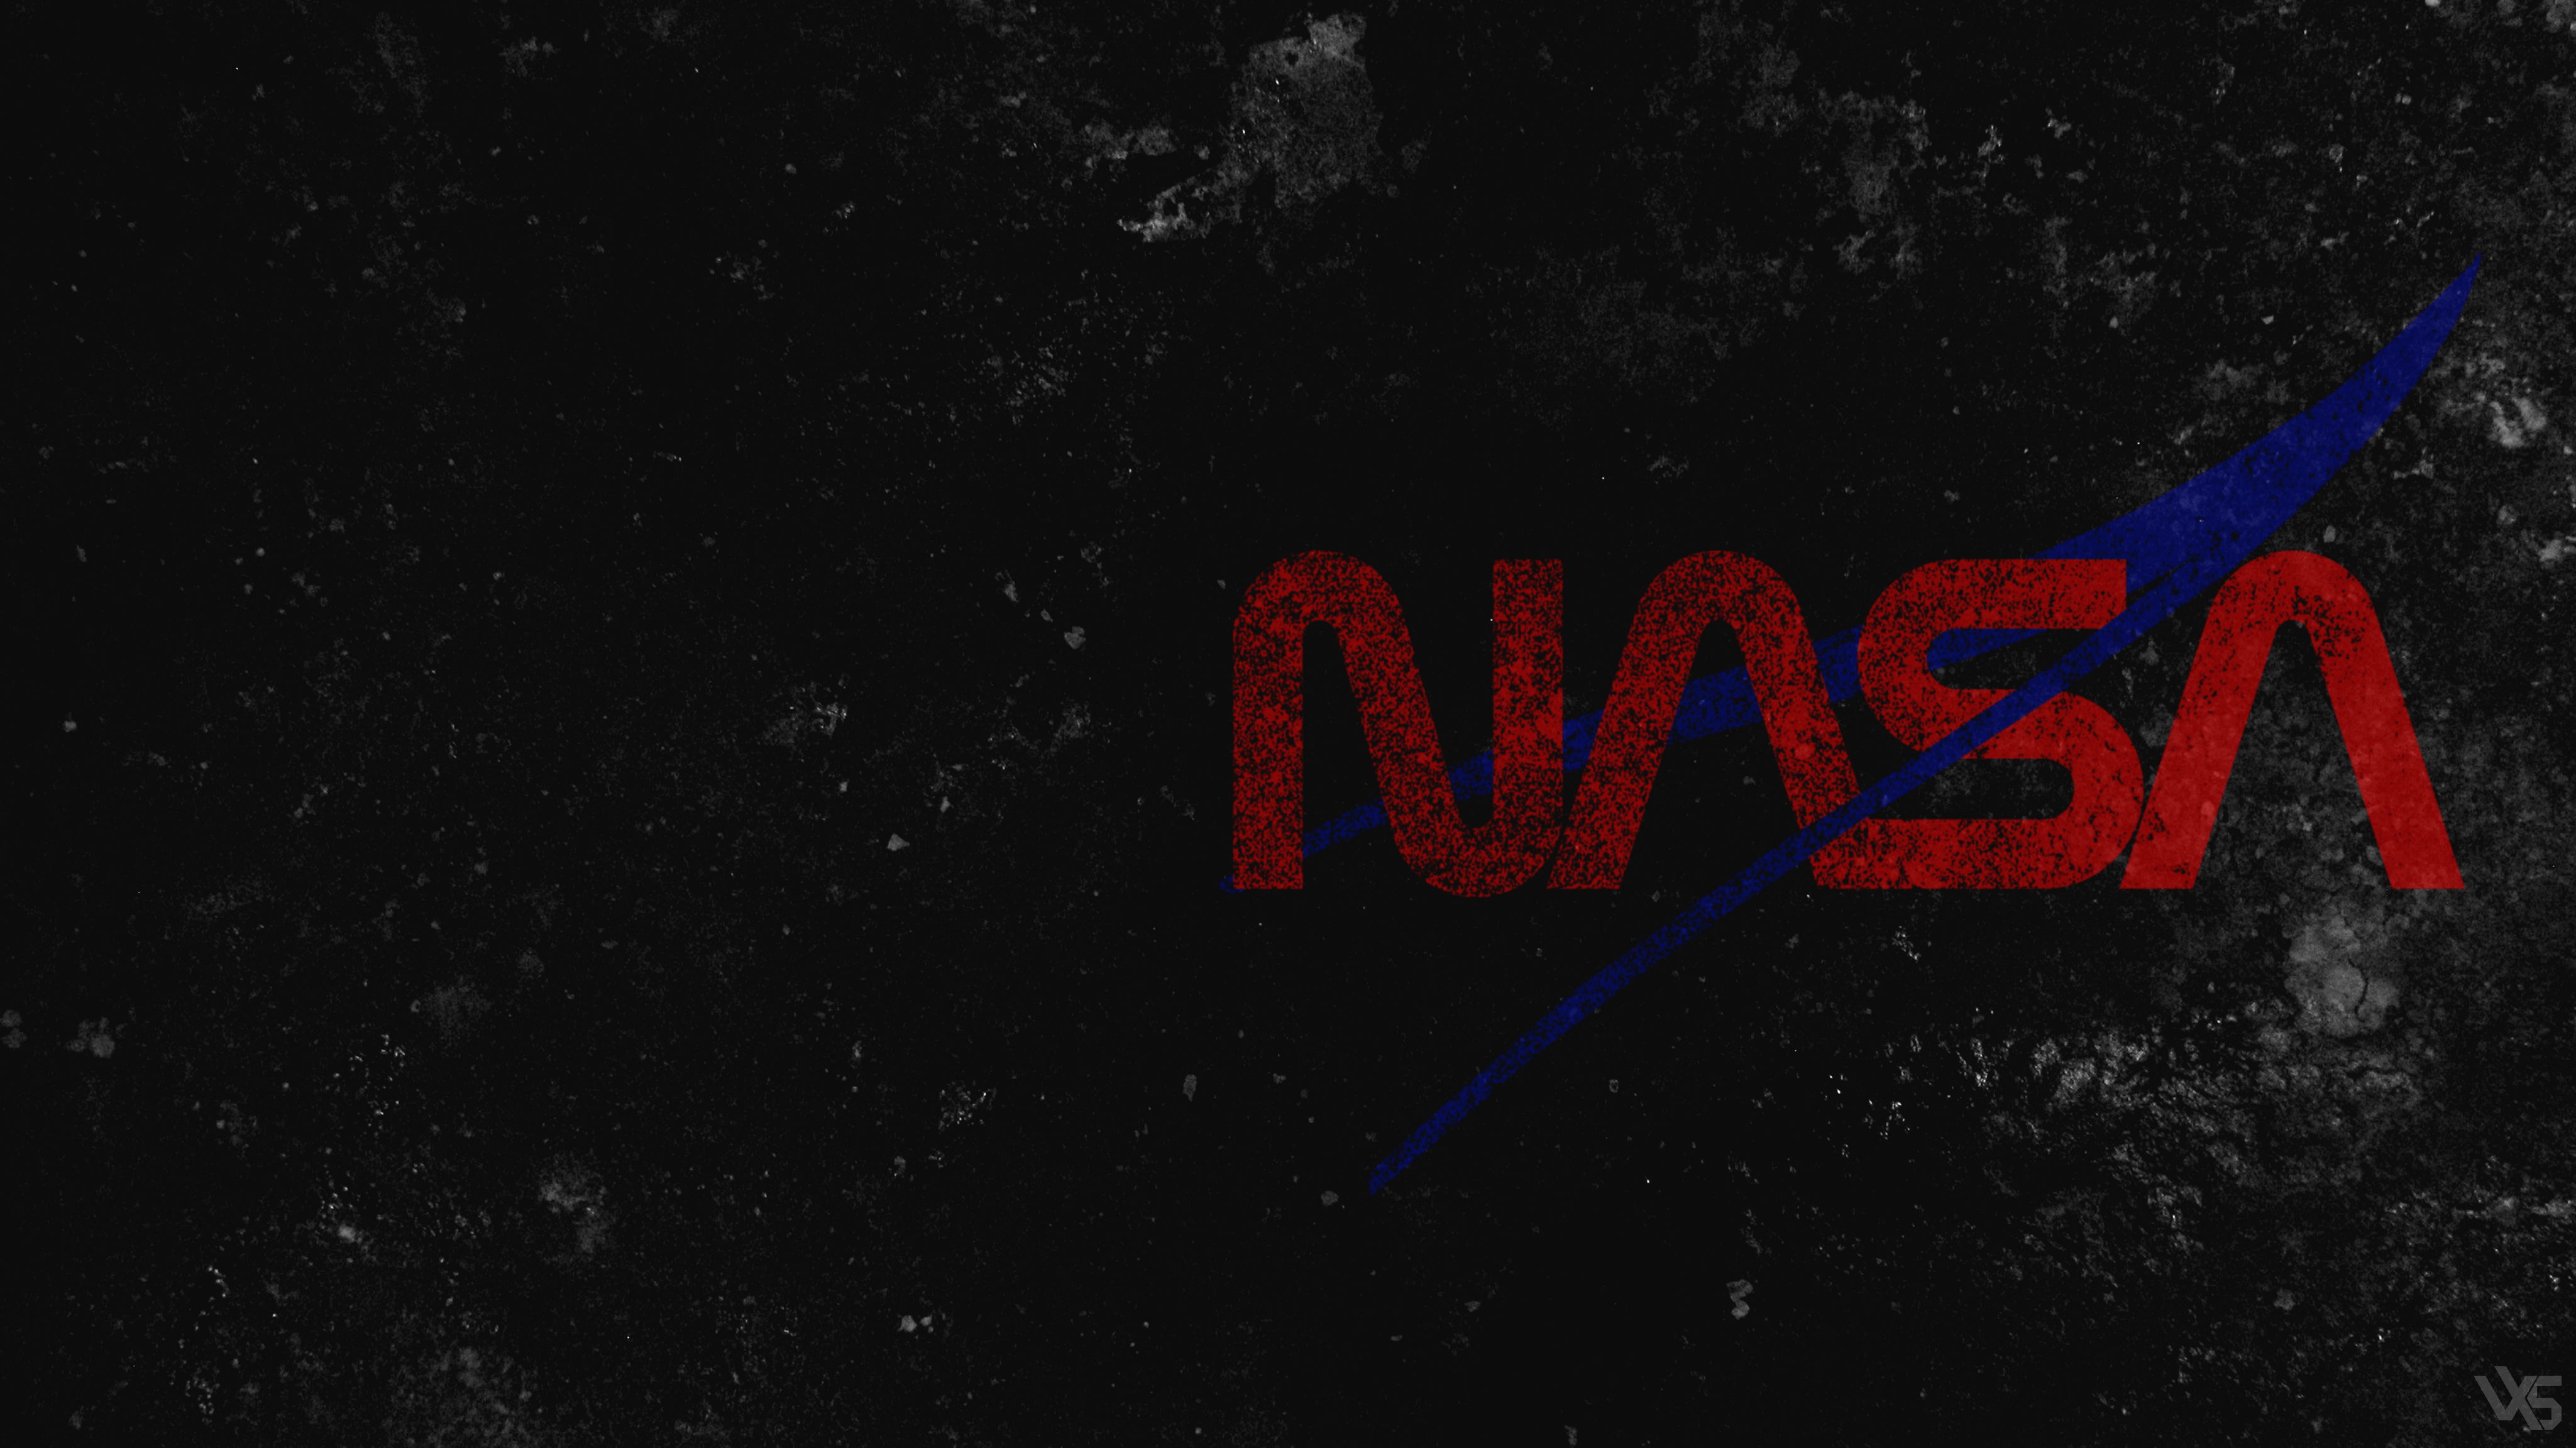 NASA Logic Wallpapers on